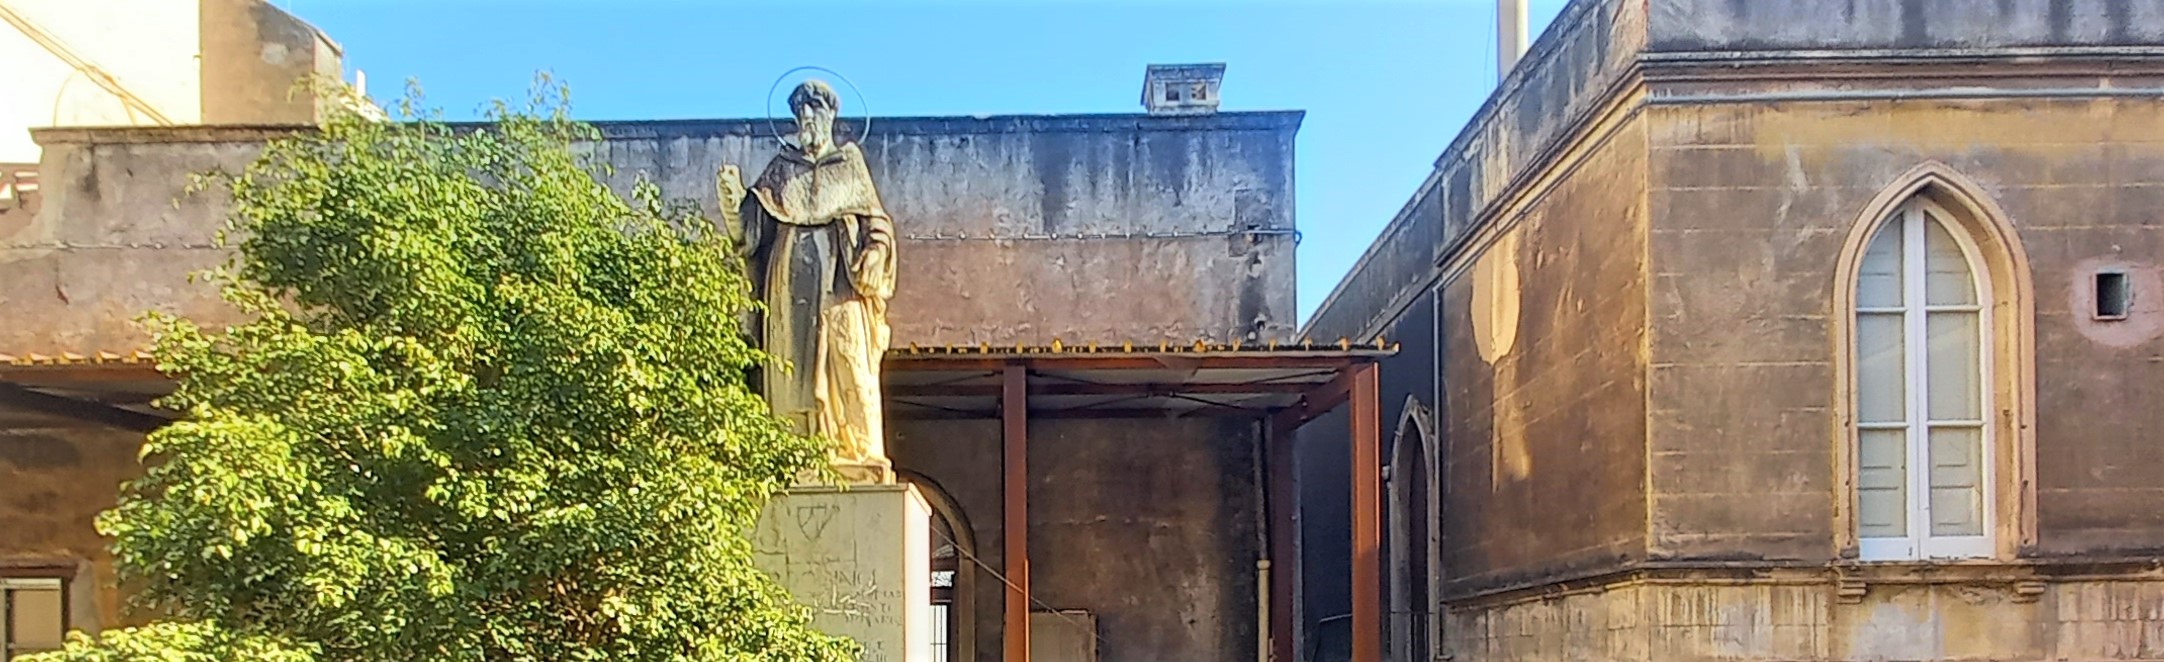 Convento San Domenico Catania Visionaria Sicily needs love